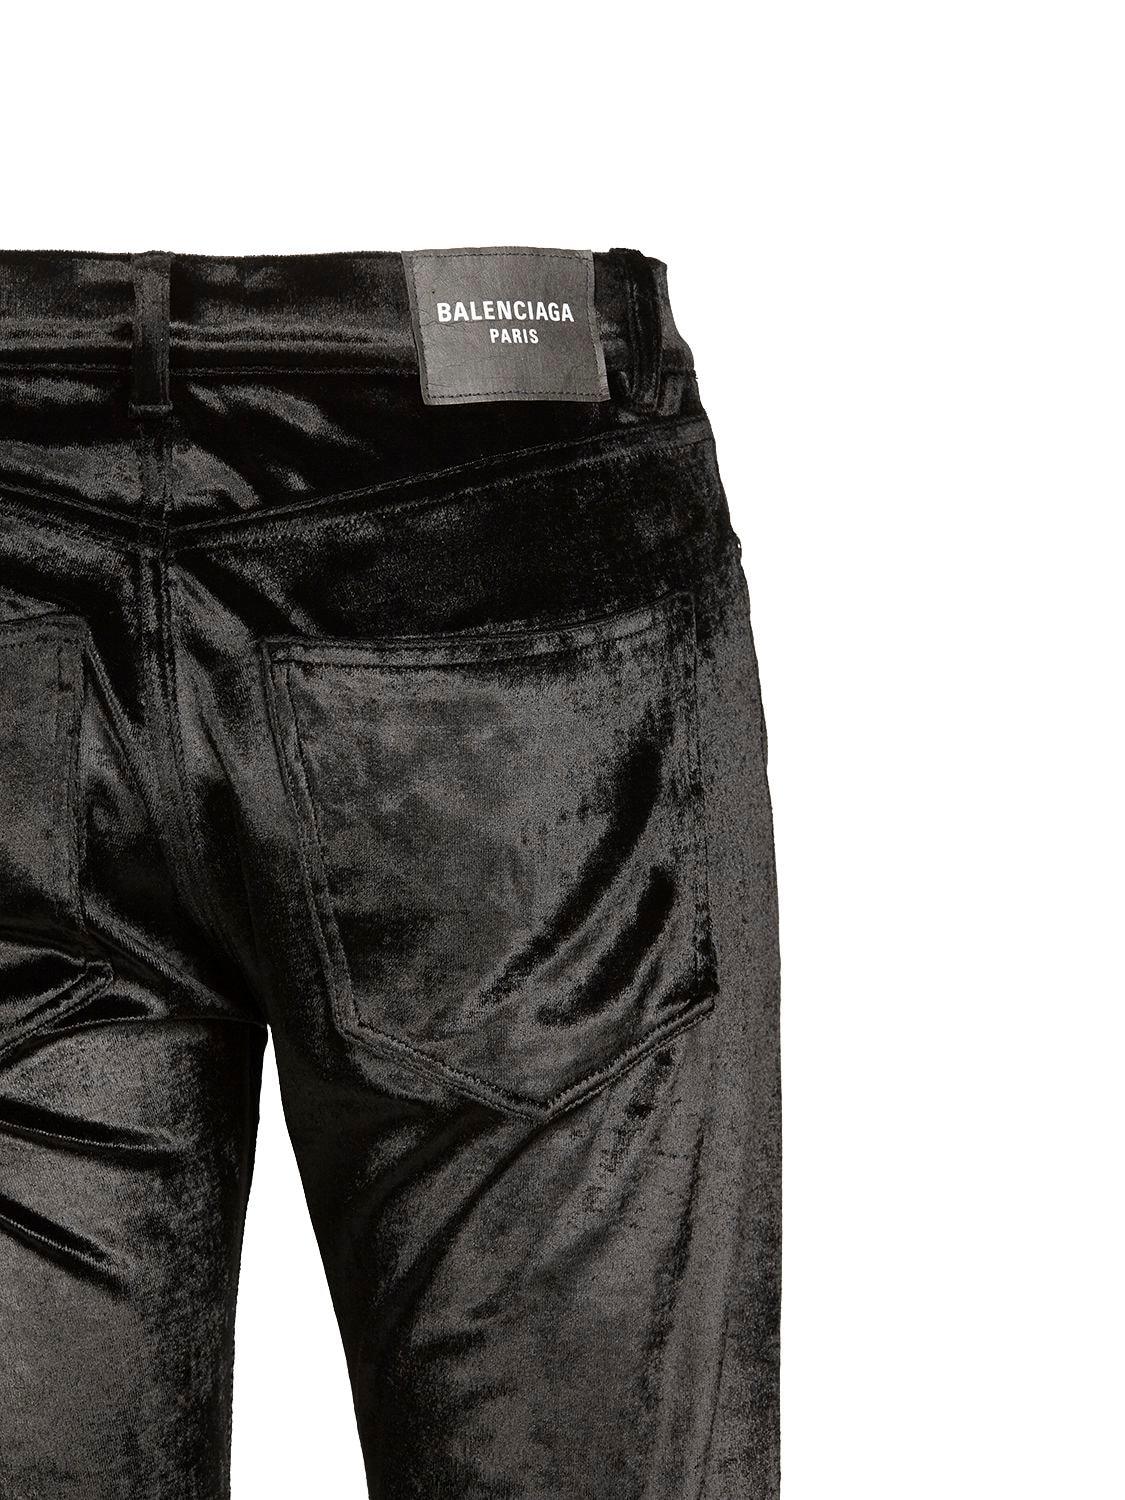 Balenciaga 5 Pocket Stretch Velvet Pants in Gray for Men | Lyst